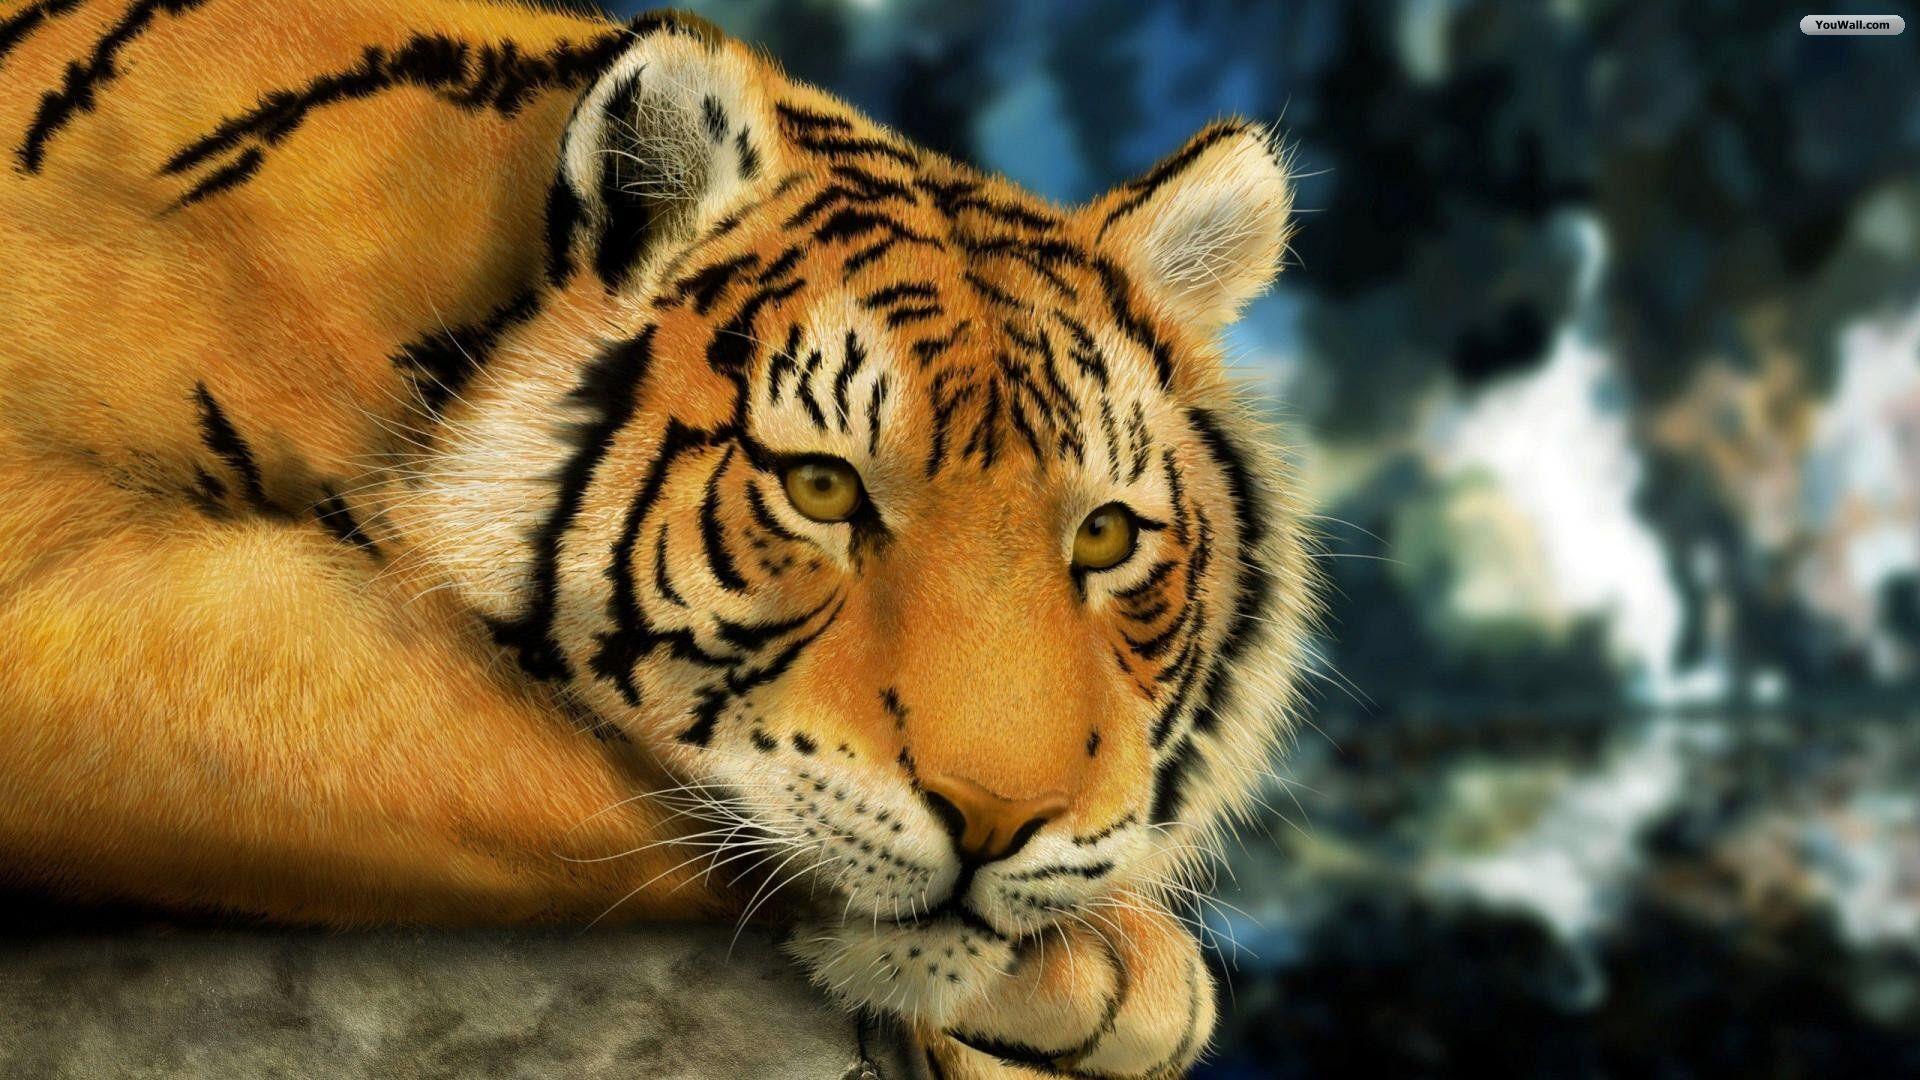 Tiger Wallpaper 3D Photo Free Download > SubWallpaper